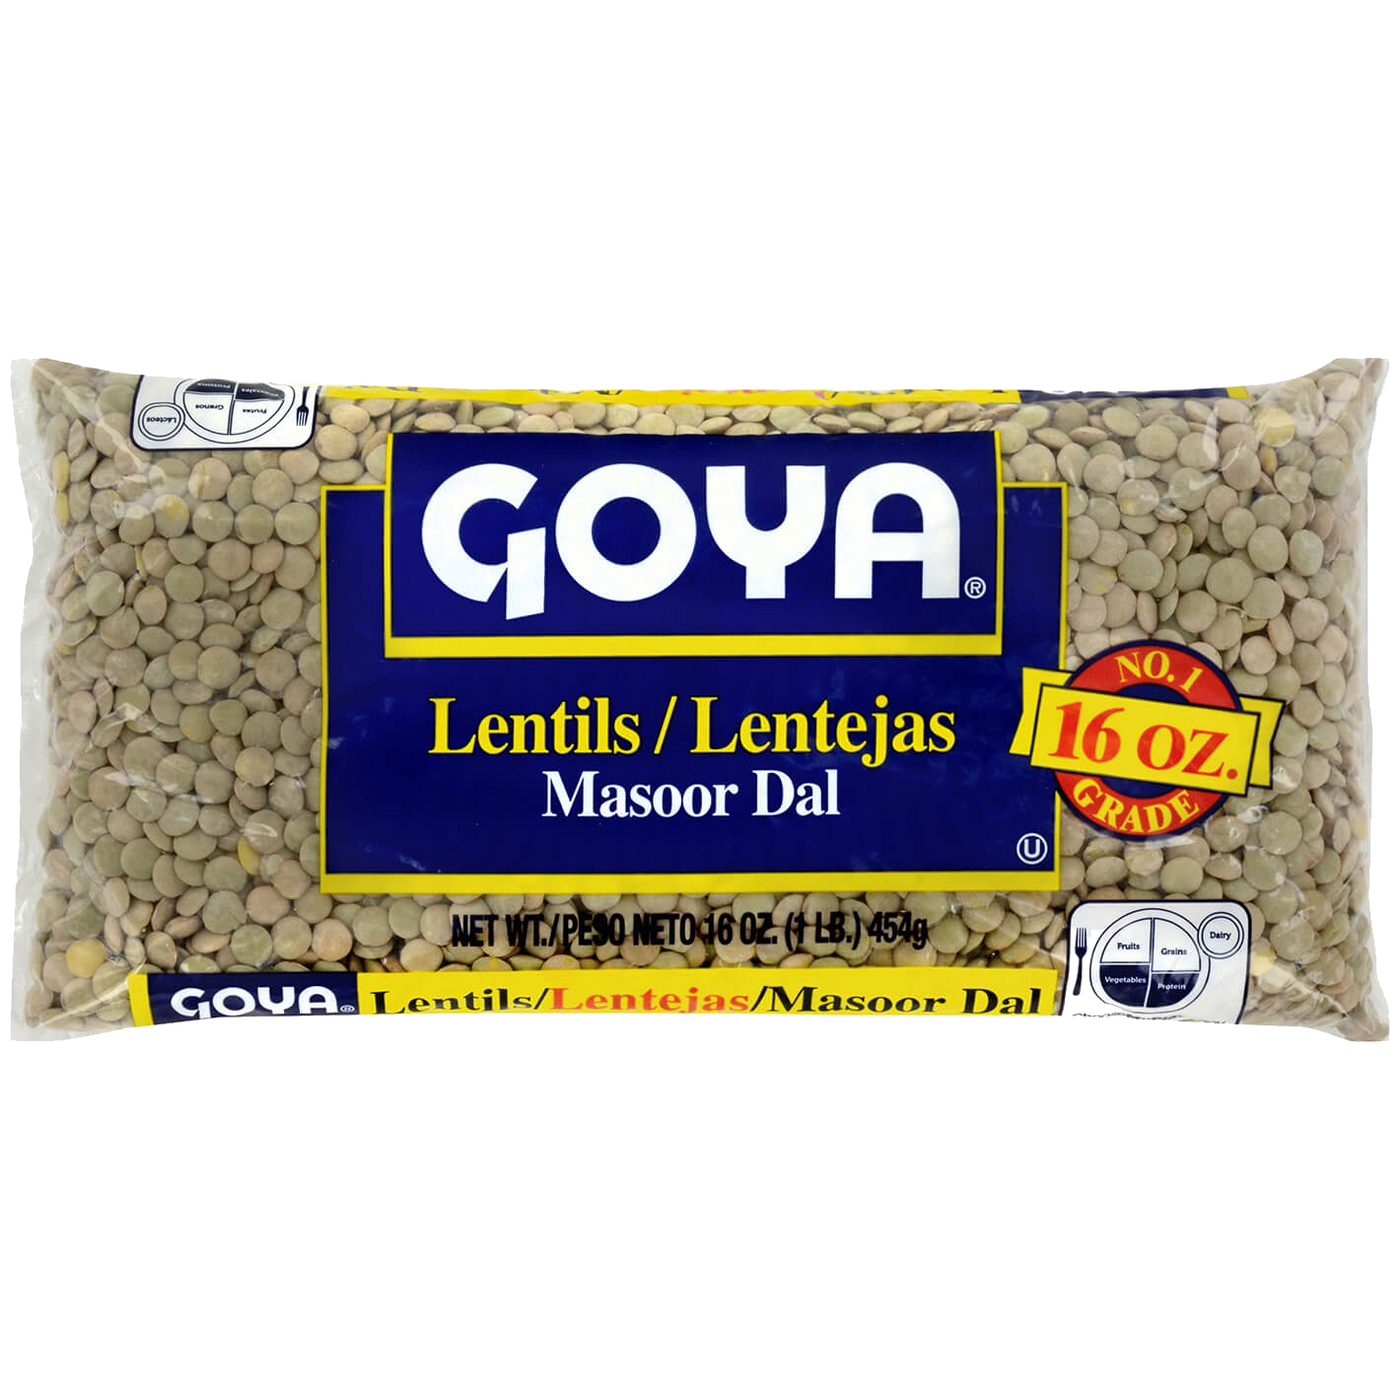   Goya Lentils